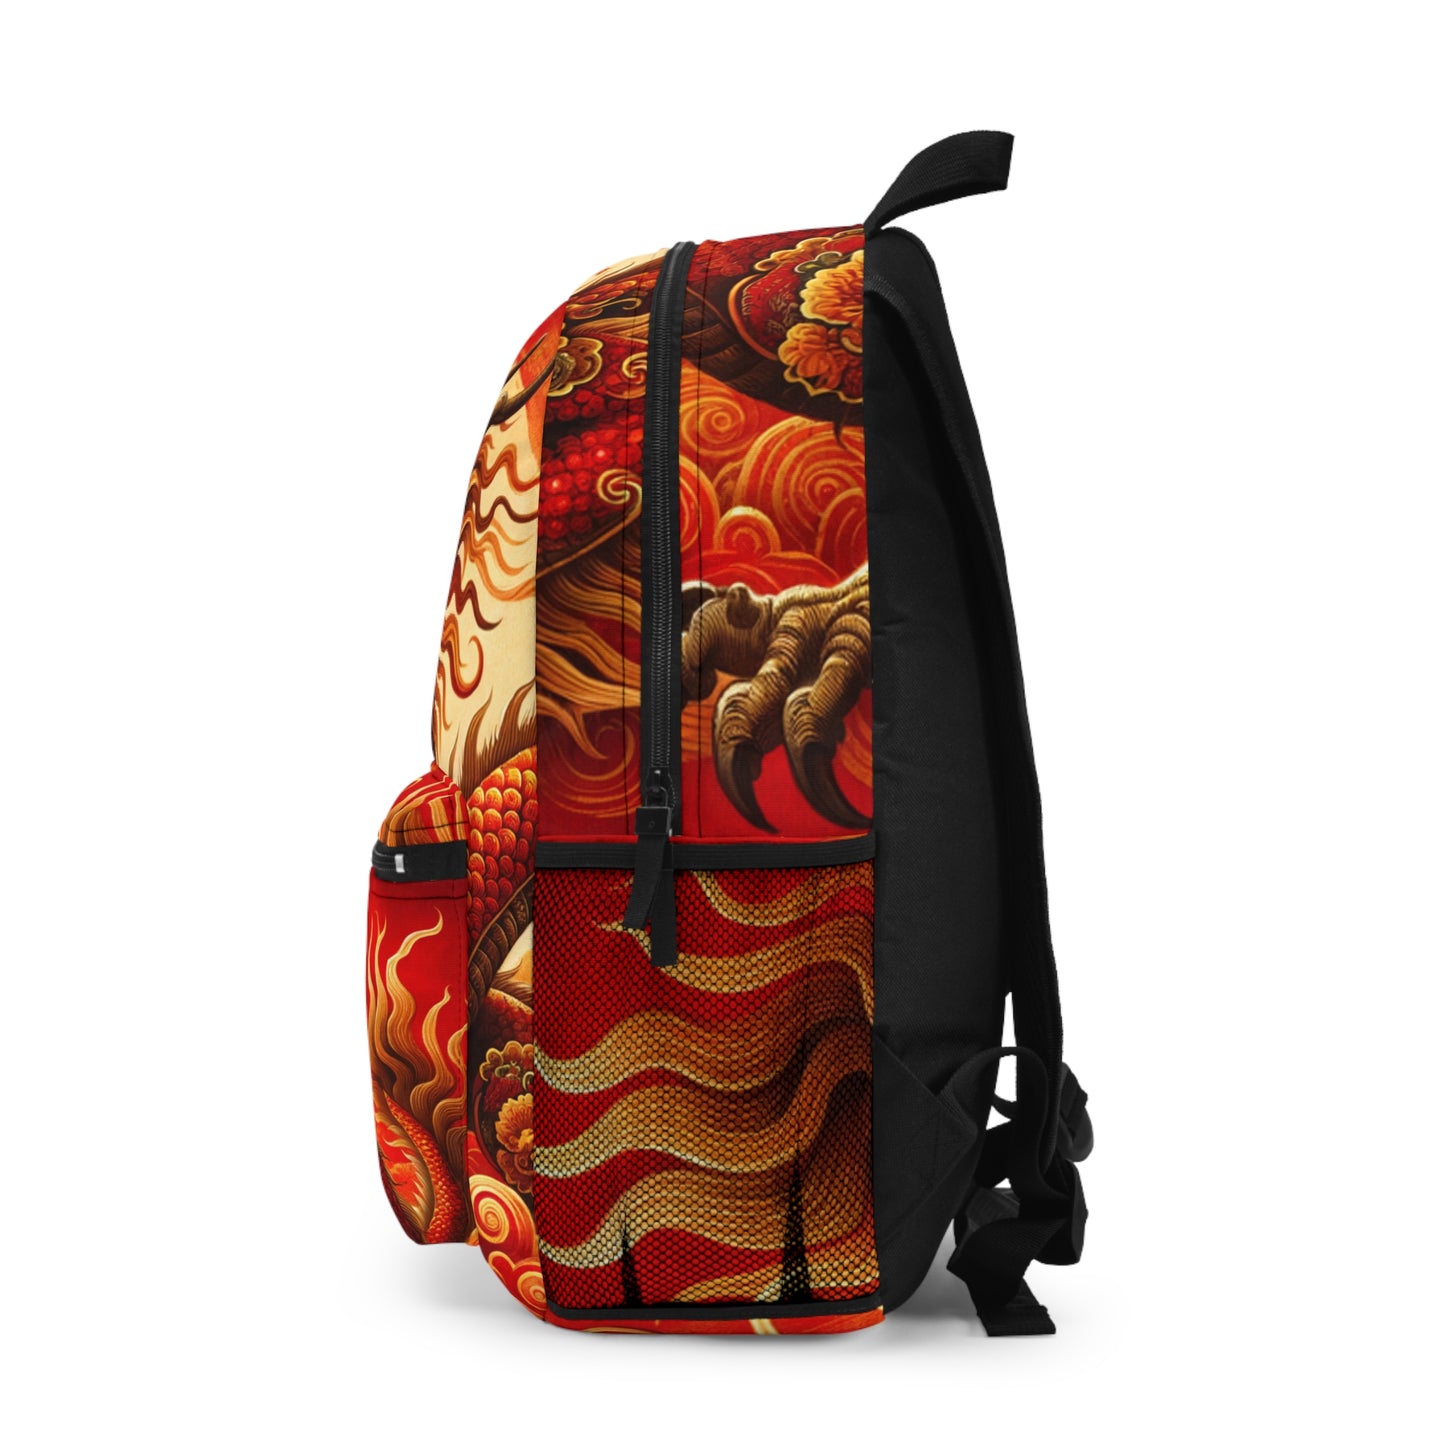 "Golden Dragon Dance in the Crimson Twilight" - Backpack